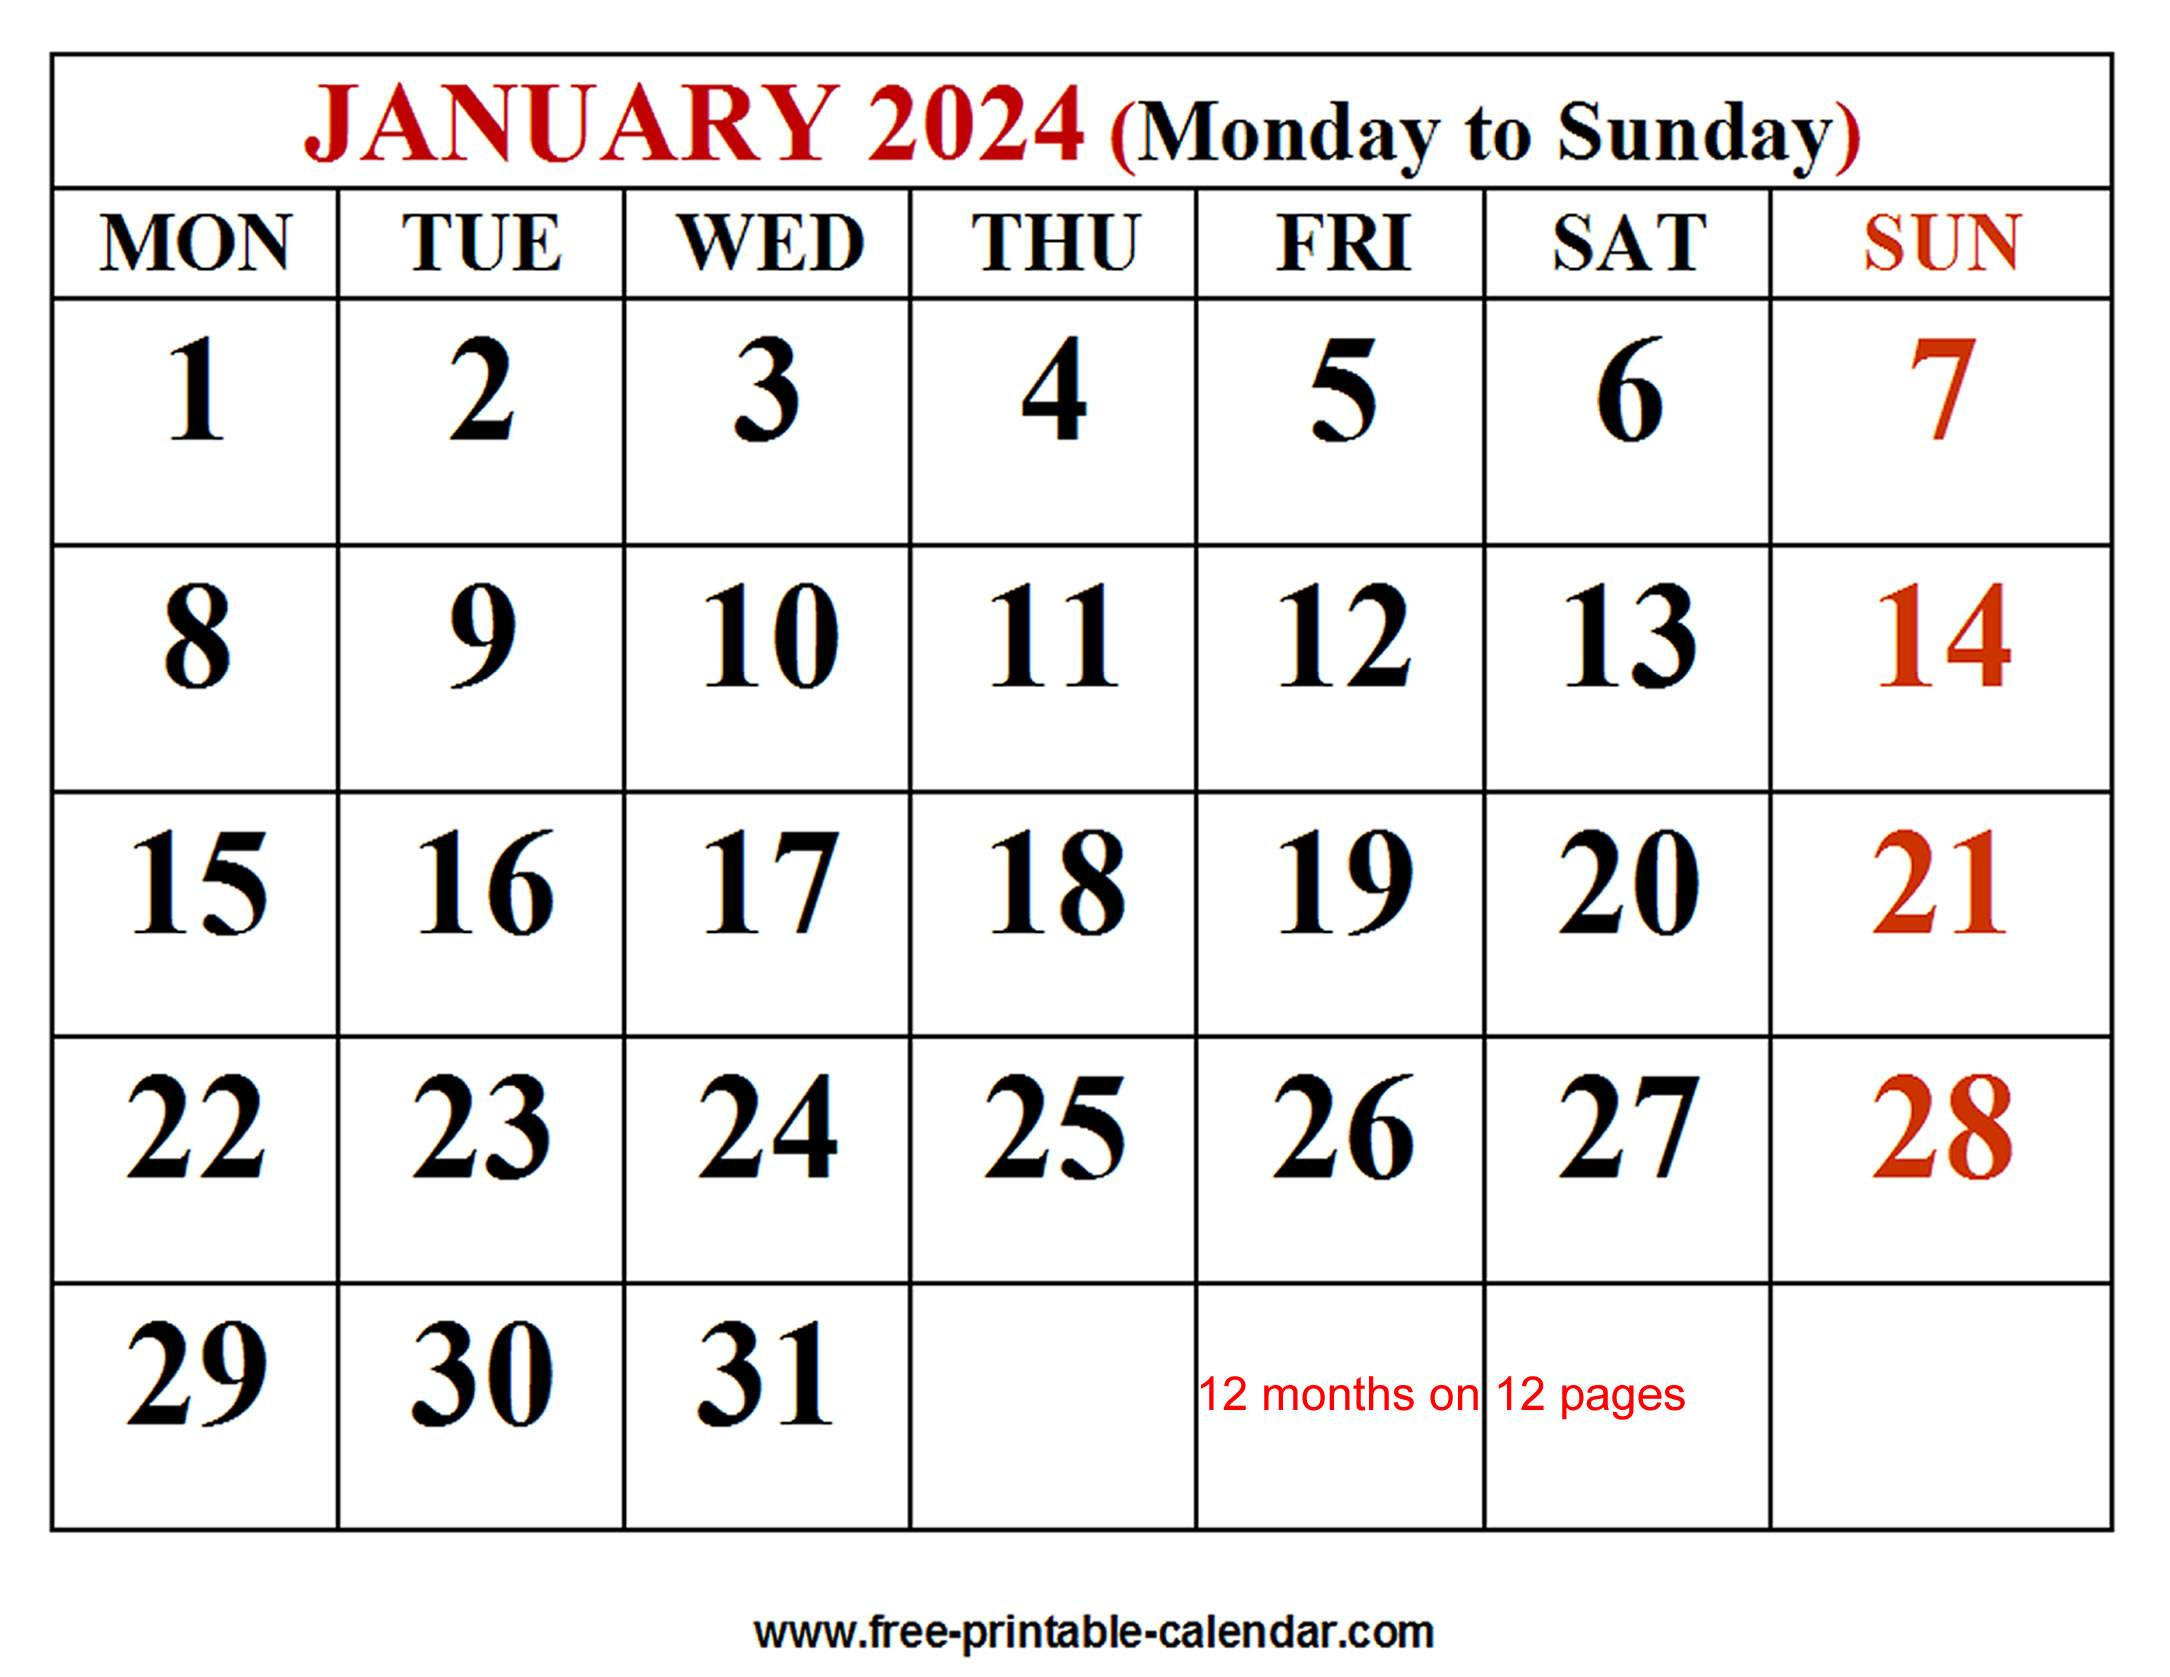 2024 Calendar Template - Free-Printable-Calendar | Printable Calendar 2024 4 Months Per Page